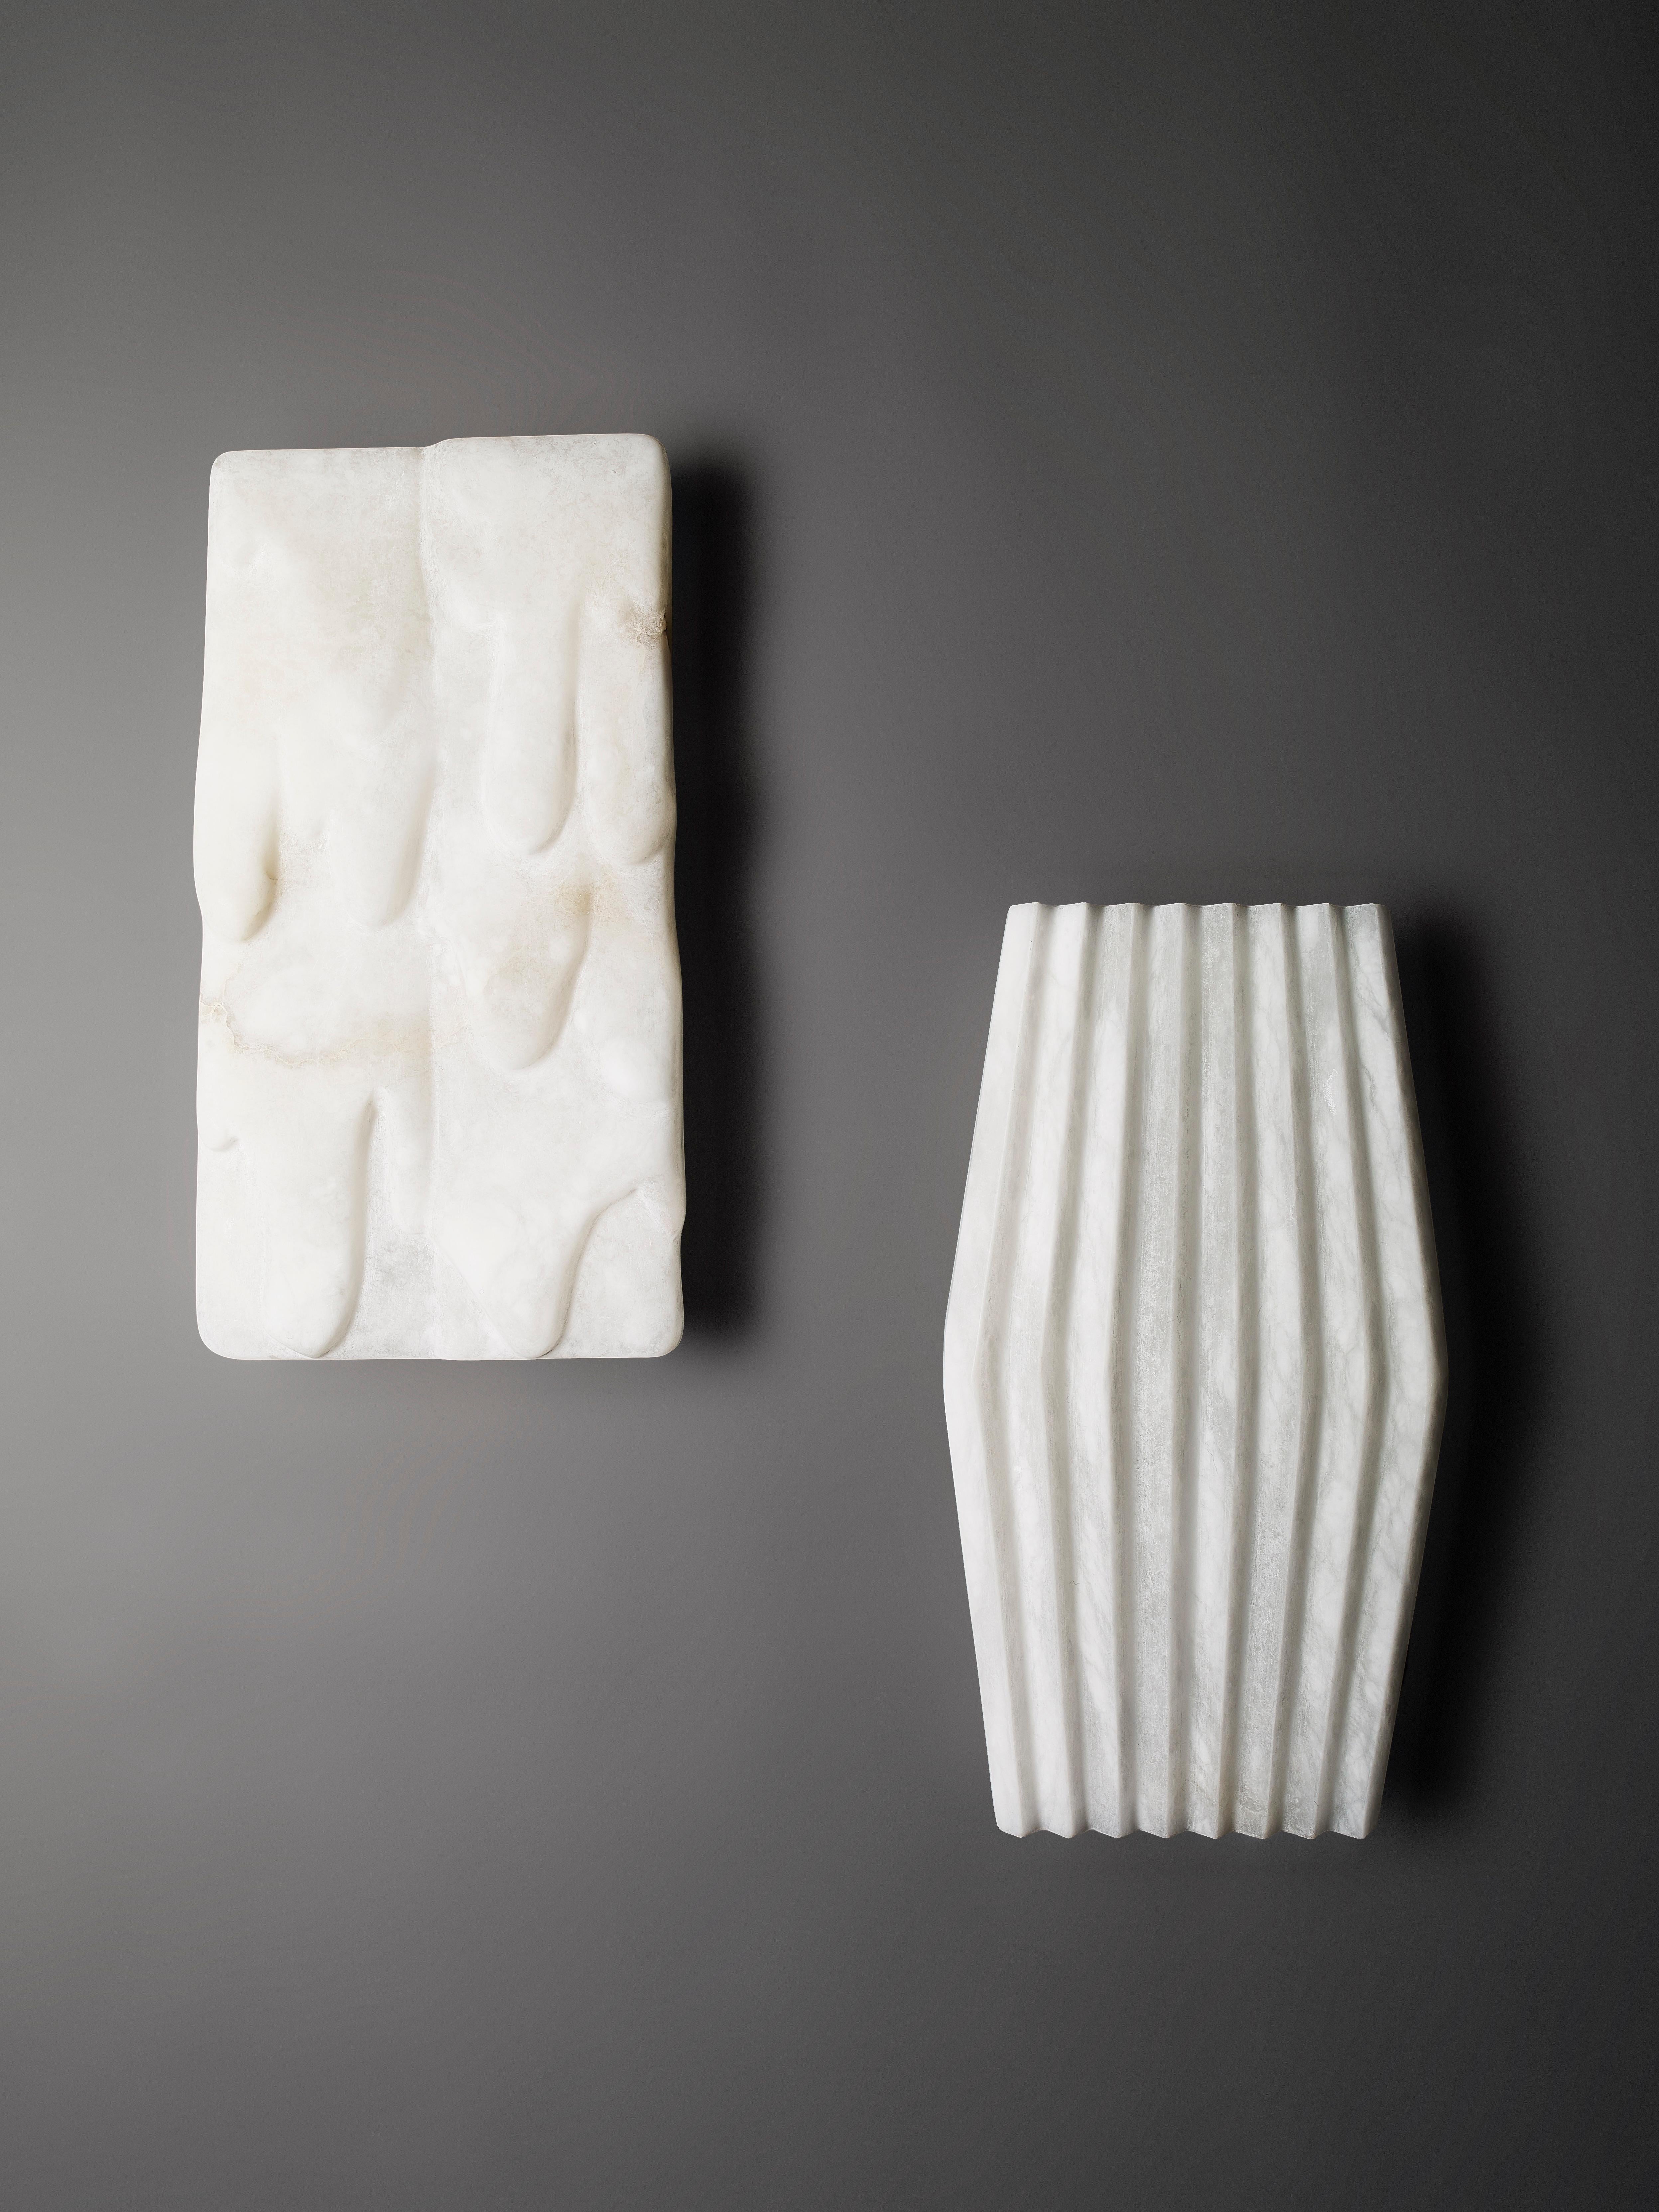 Bespoke Minimalist Italian Neoclassical Drop Decor White Alabaster Modern Sconce 2